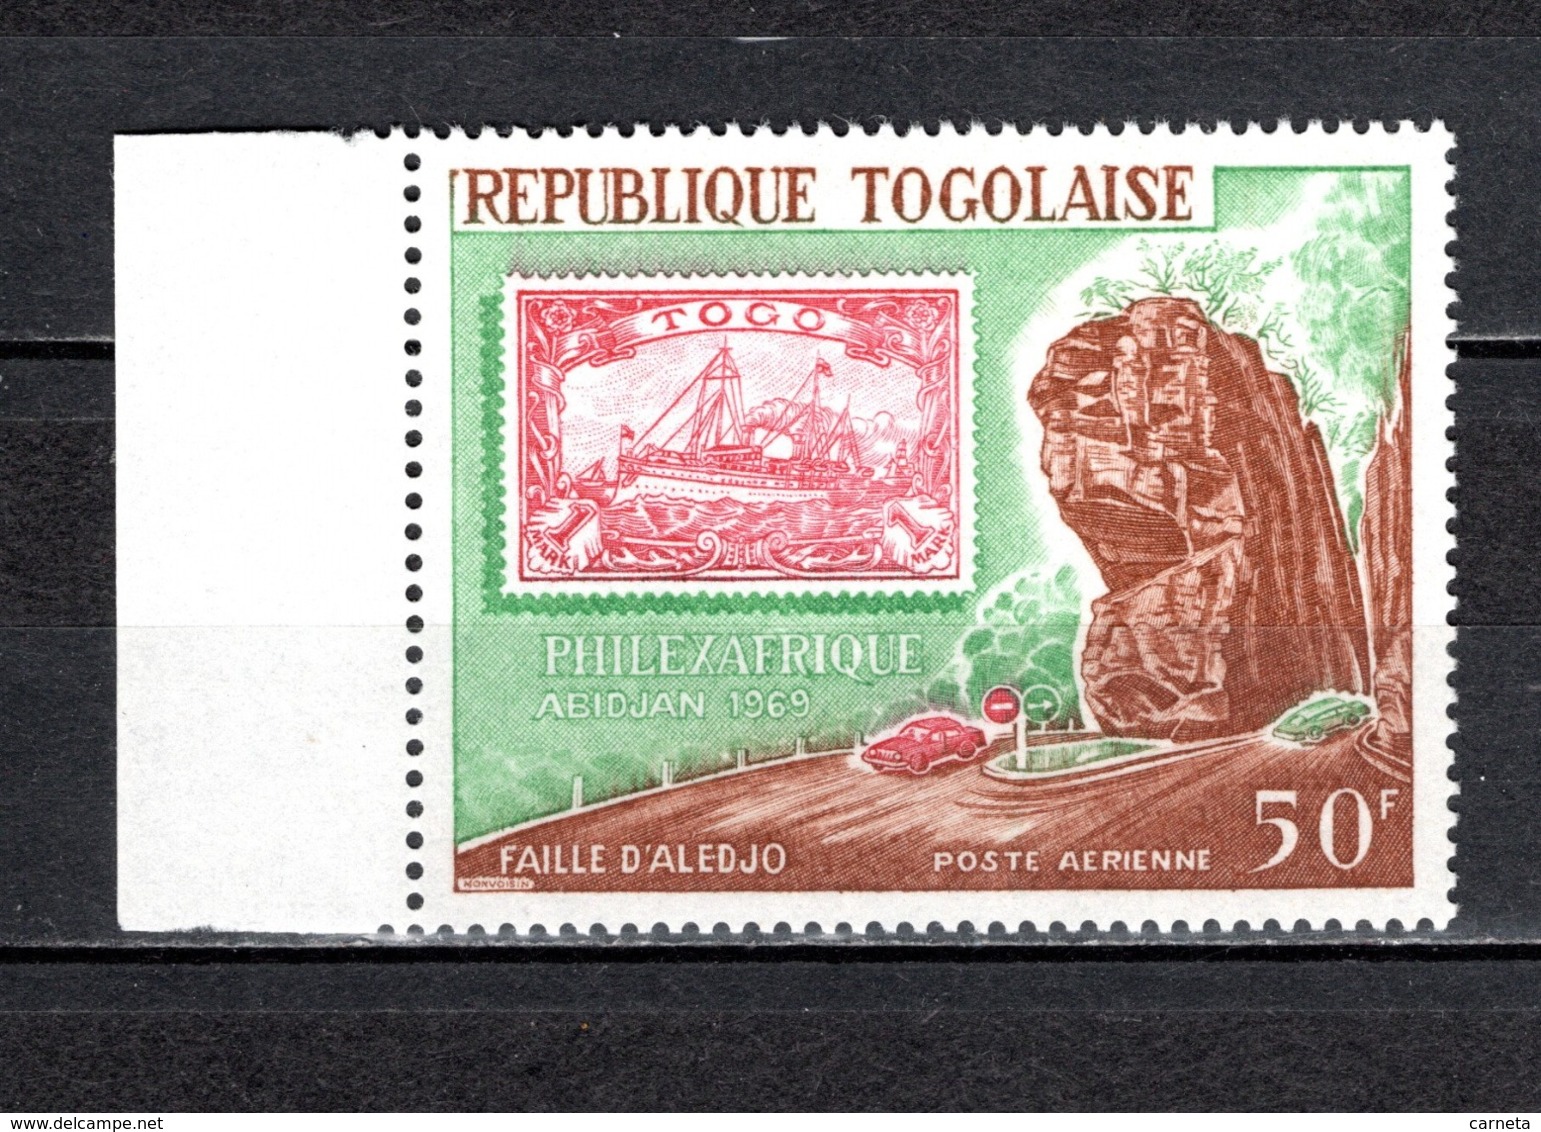 TOGO PA  N° 104  NEUF SANS CHARNIERE COTE  3.50€   PHILEXAFRIQUE PAYSAGE TIMBRE SUR TIMBRE - Togo (1960-...)